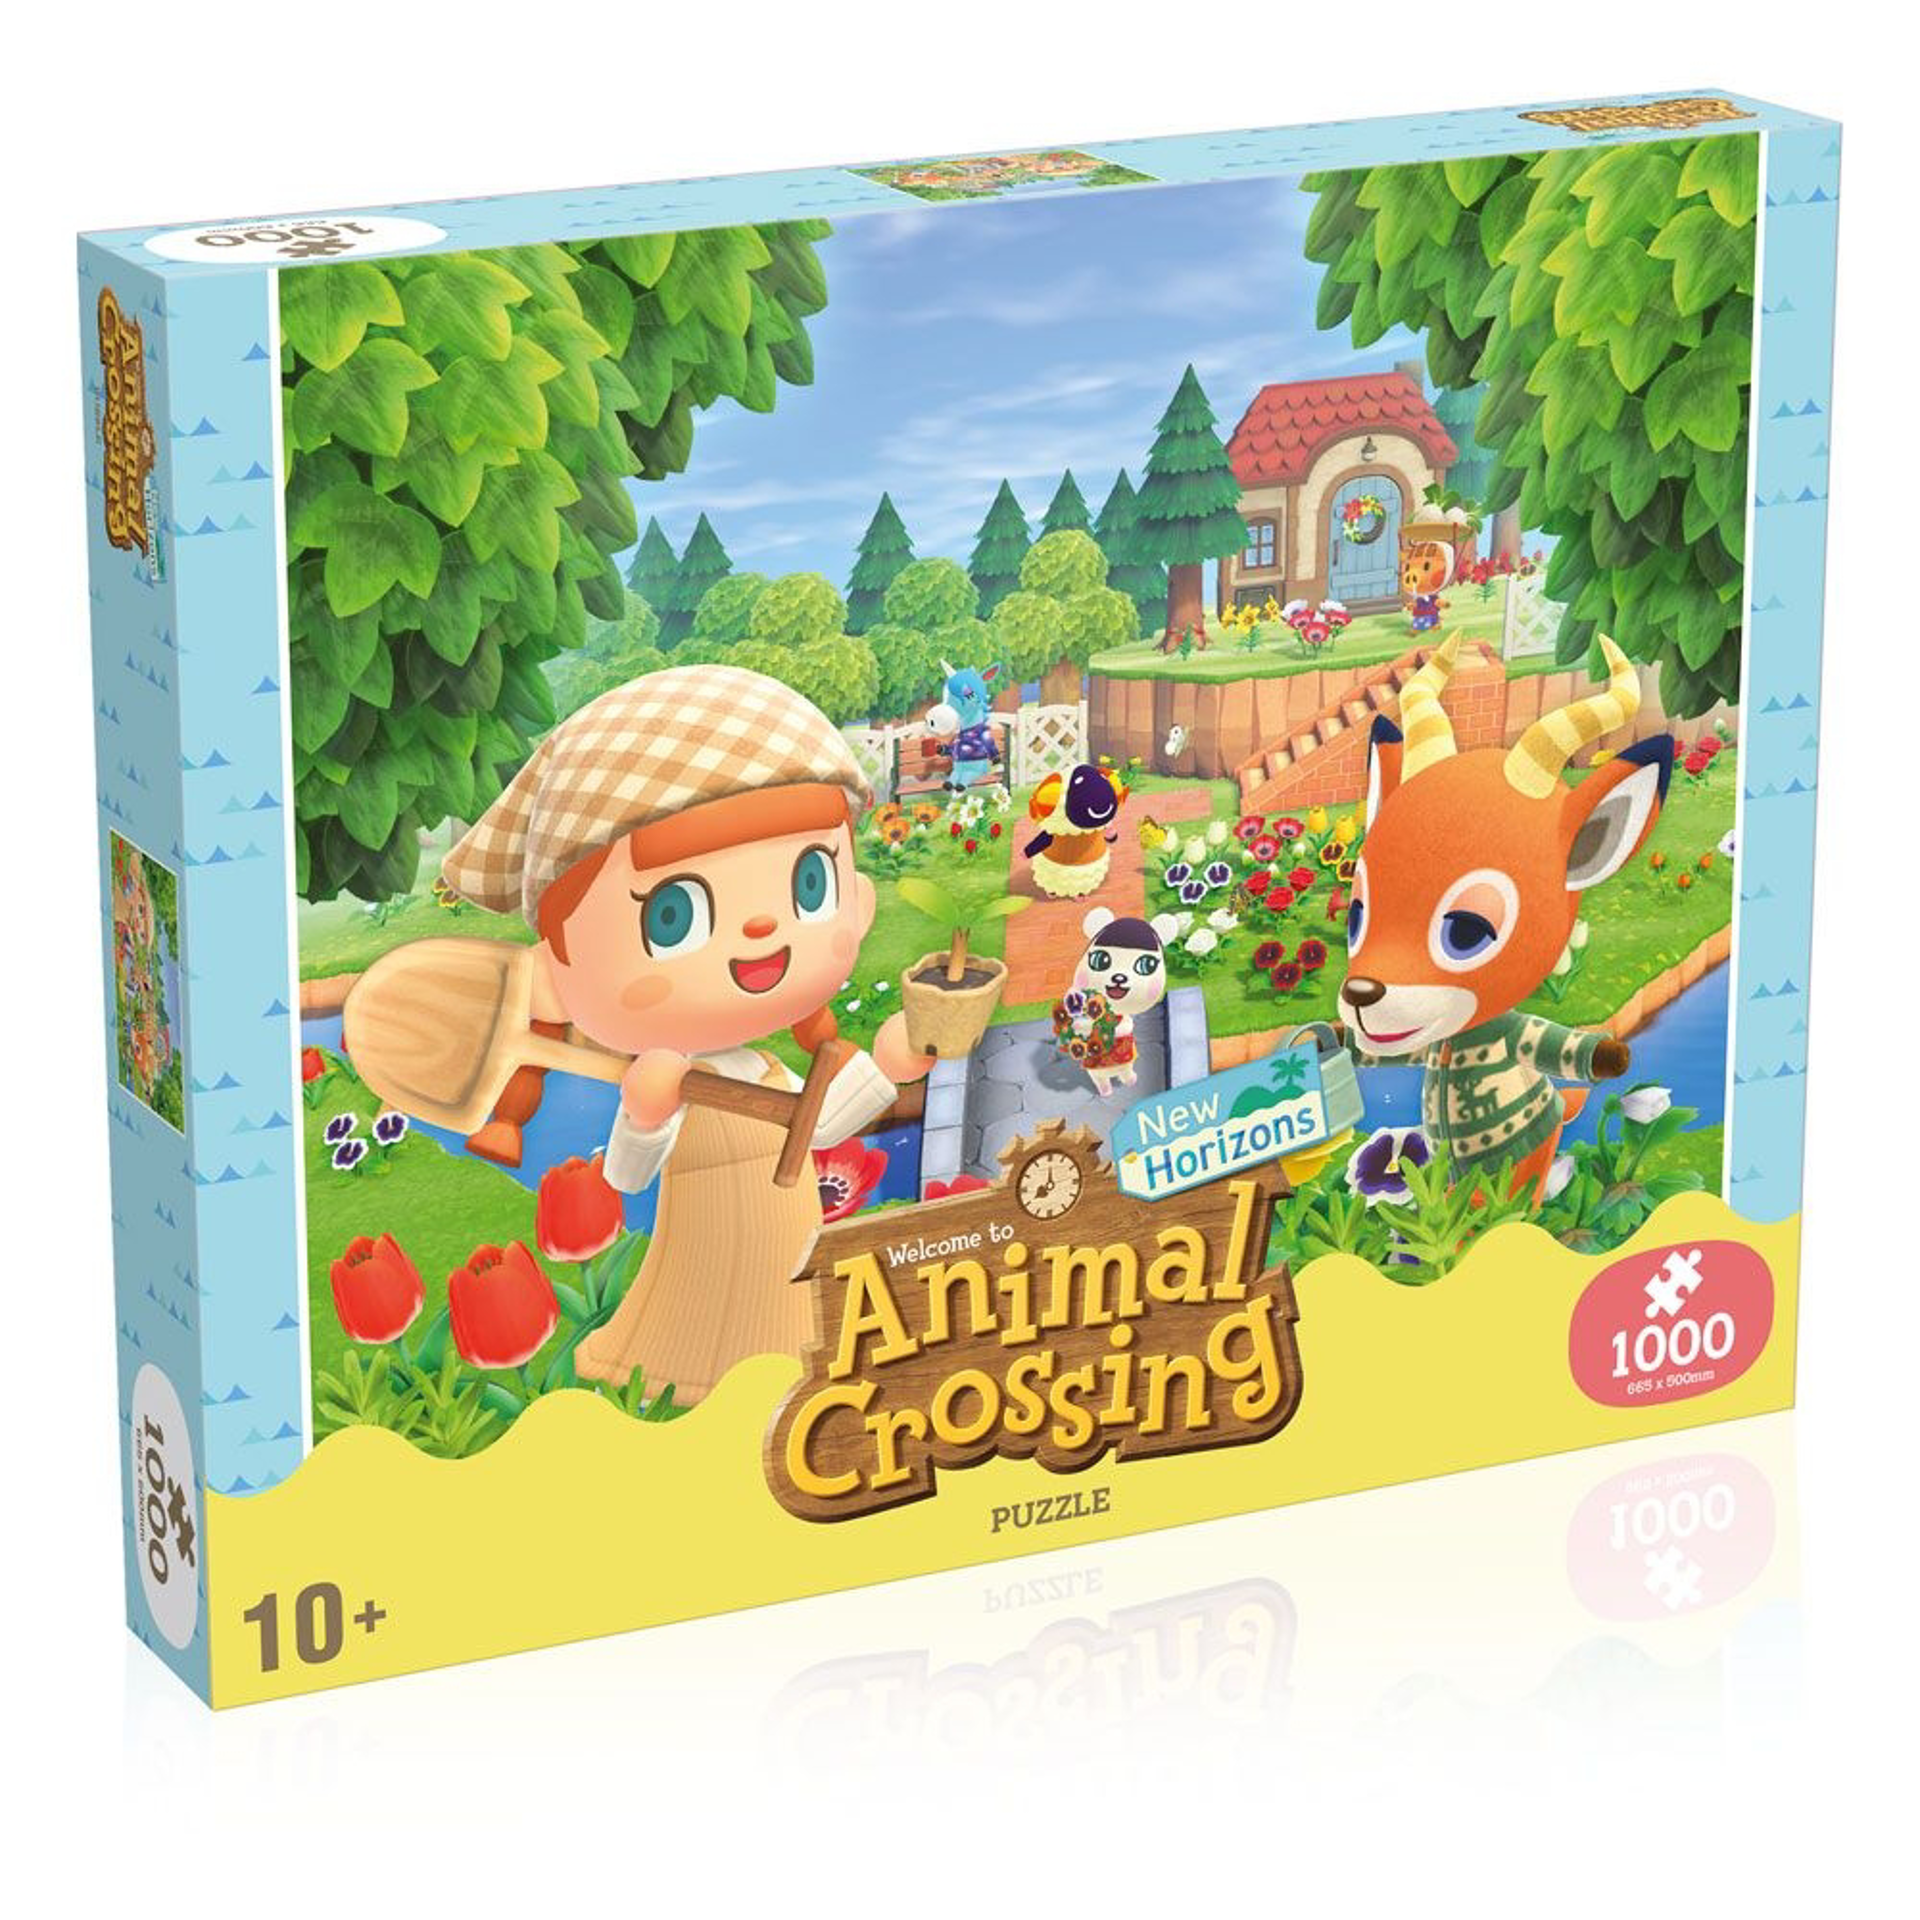 Animal Crossing New Horizons - Puzzle 1000 pcs